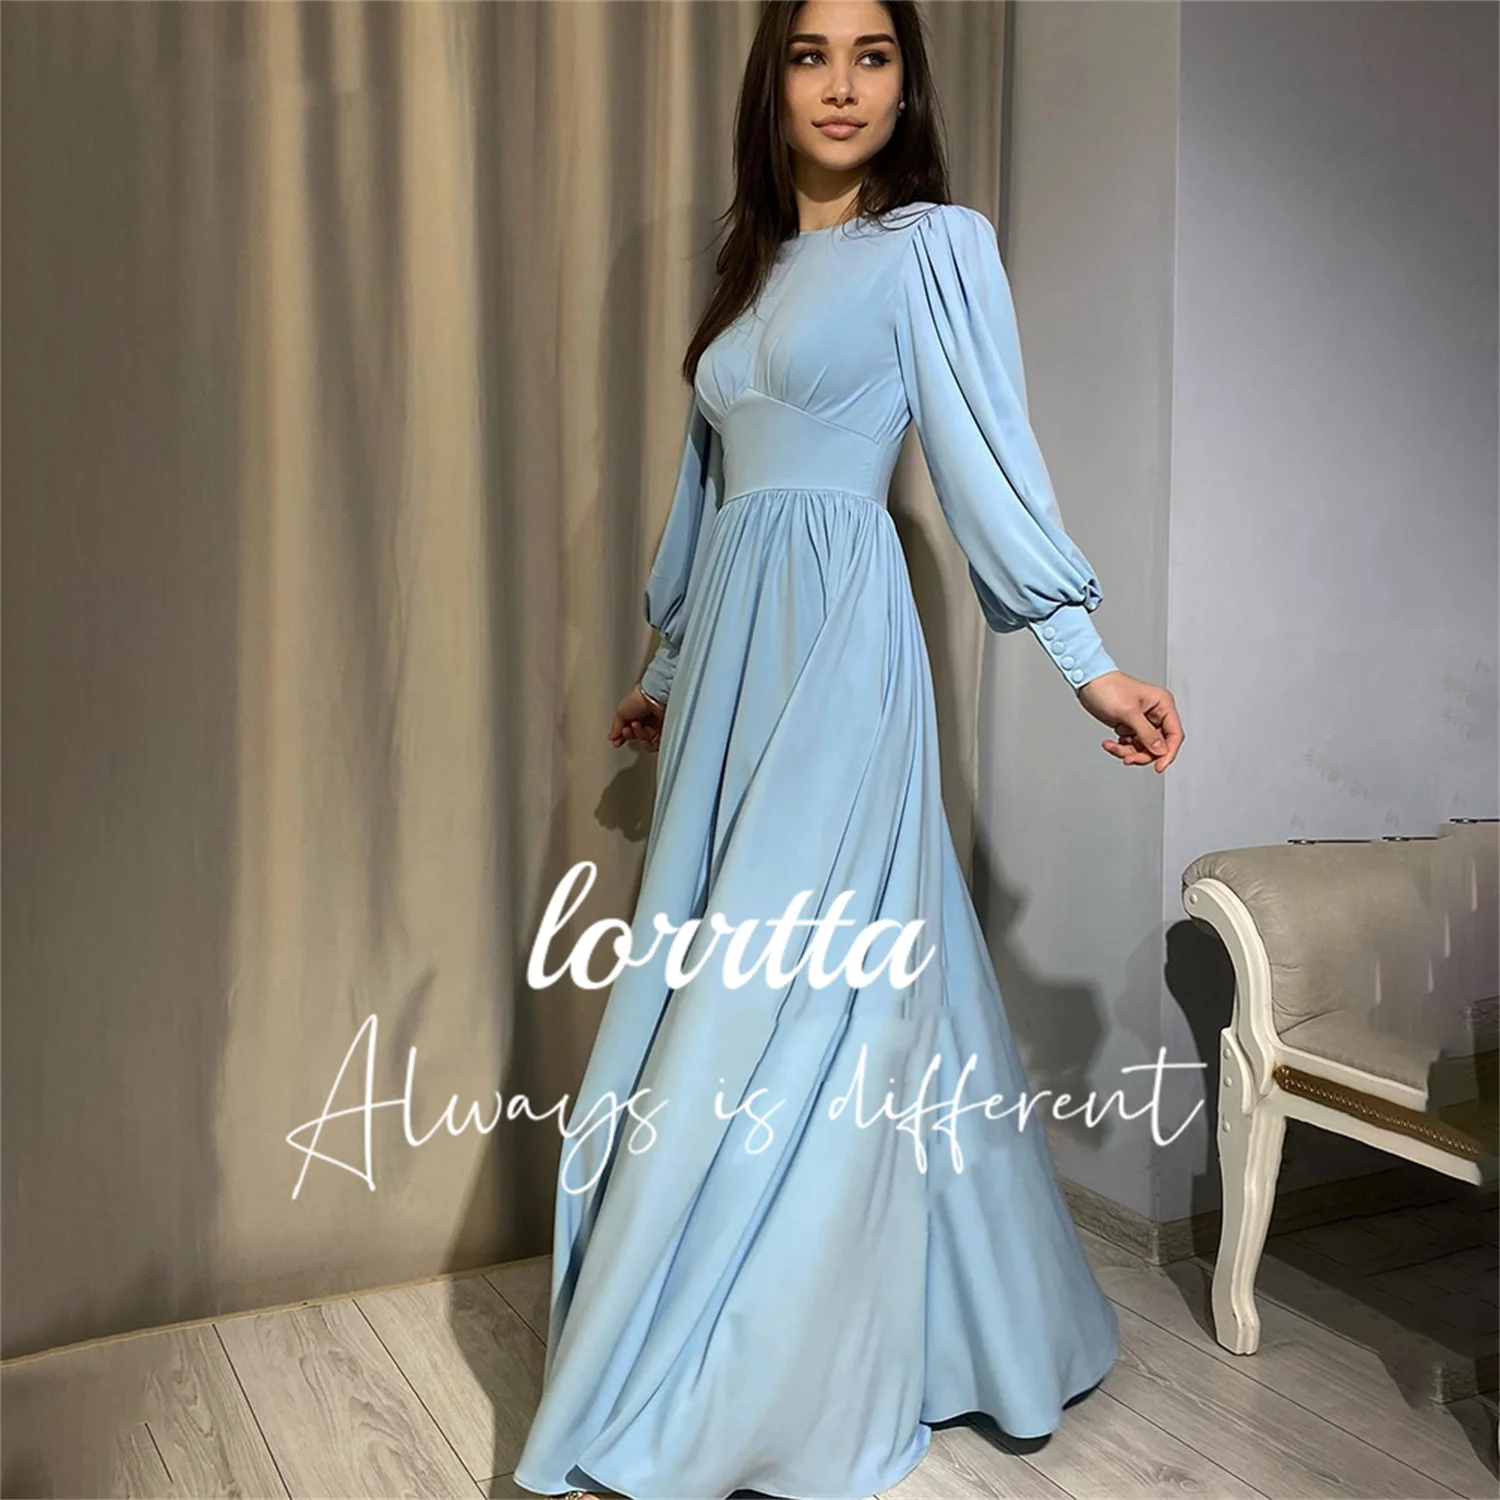 

Lorrtta Sky Blue Long Sleeve Evening Gown Elegant Prom Party Dress Floor Length Cuffs With Buttons فساتين للحفلات الراقصة السهرة